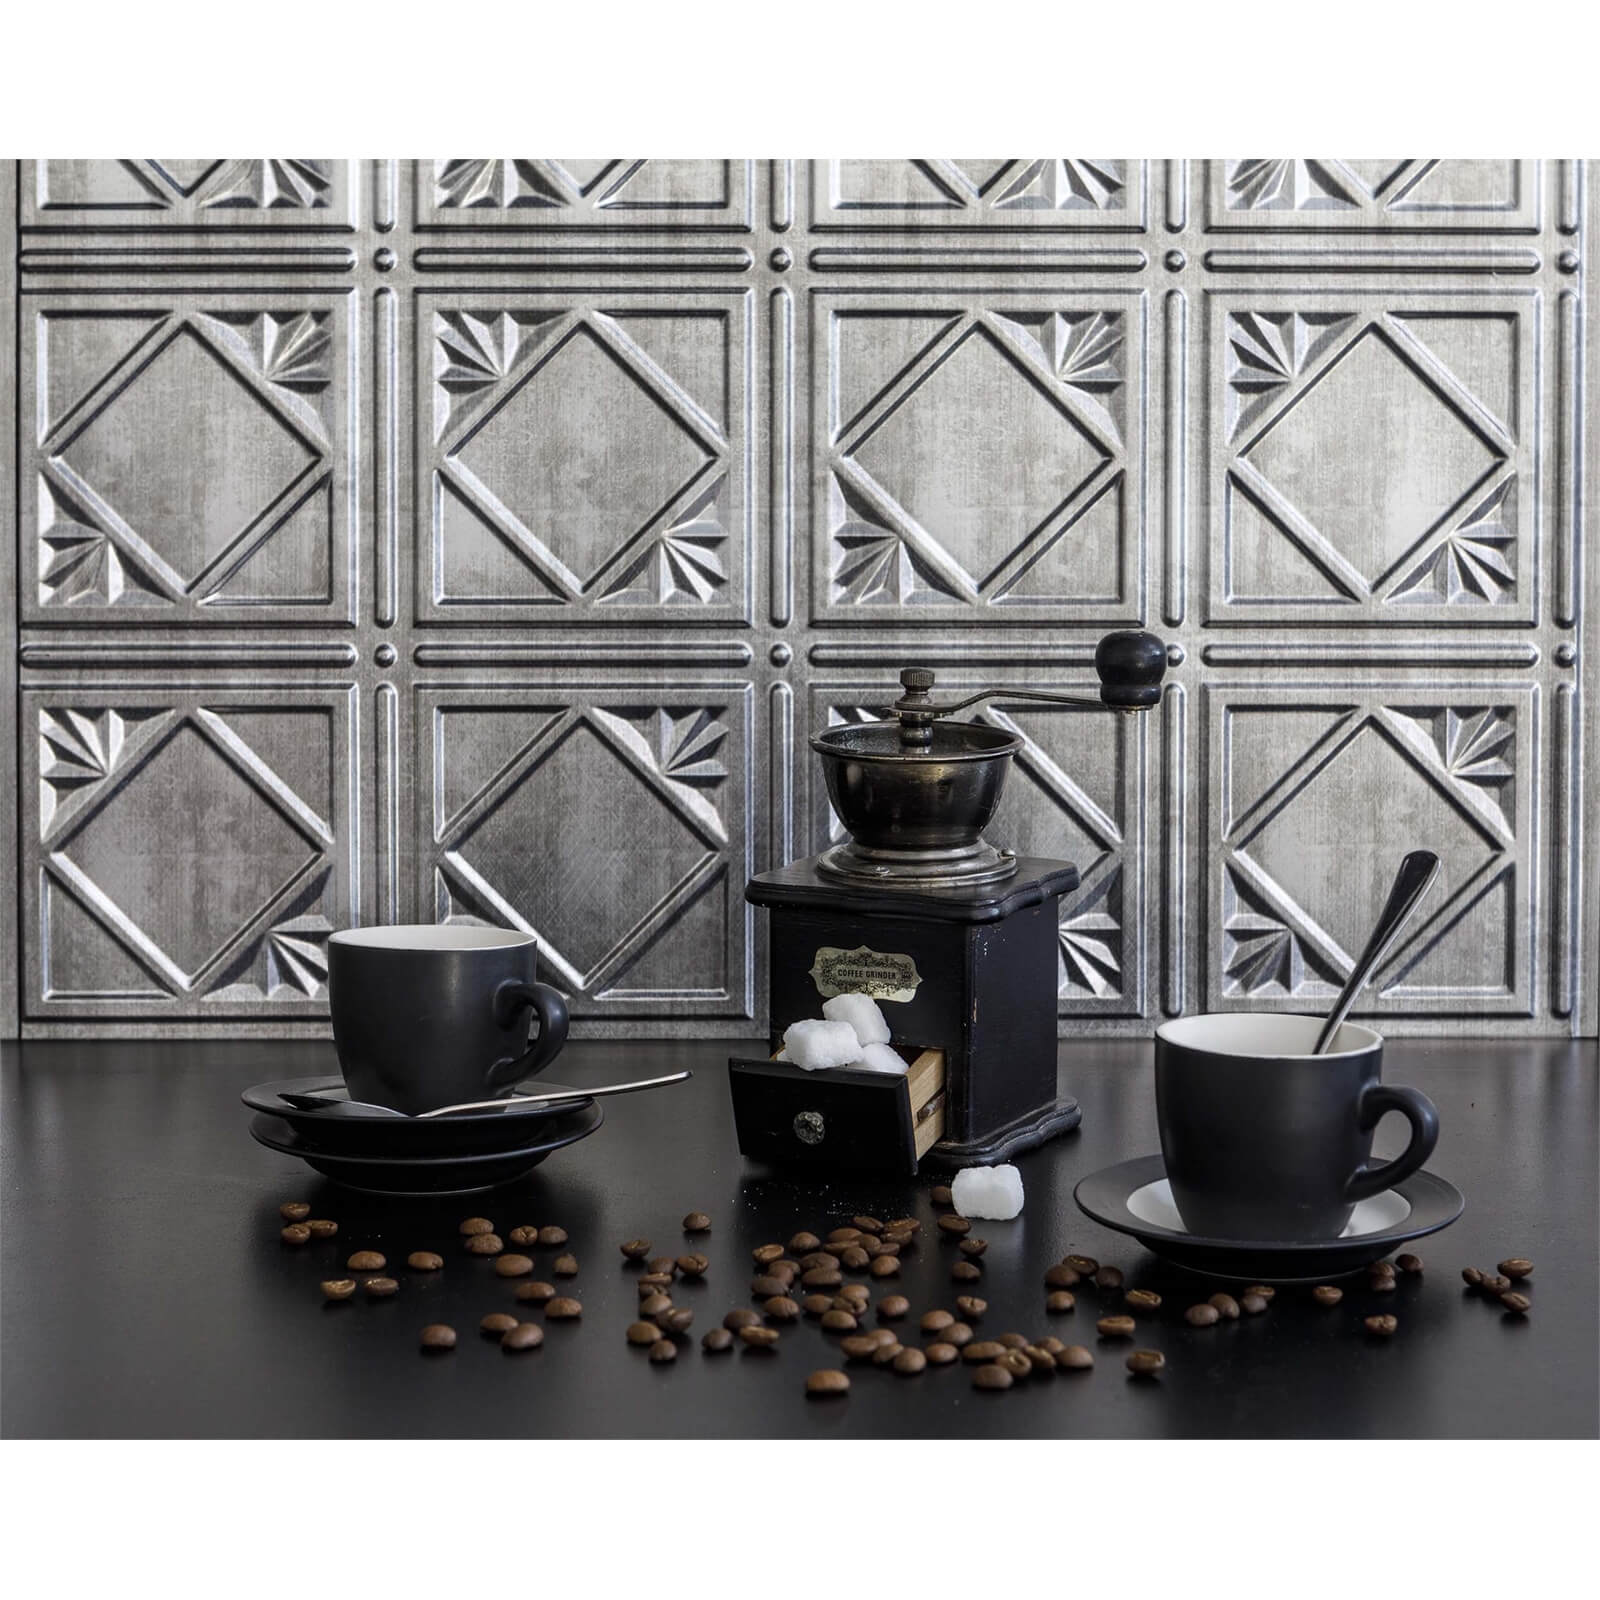 Photo of Innovera Decor 3d Design Wall Tile - Kitchen Splashback Cladding Panels -art Nouveau - Silver- Set Of 6-